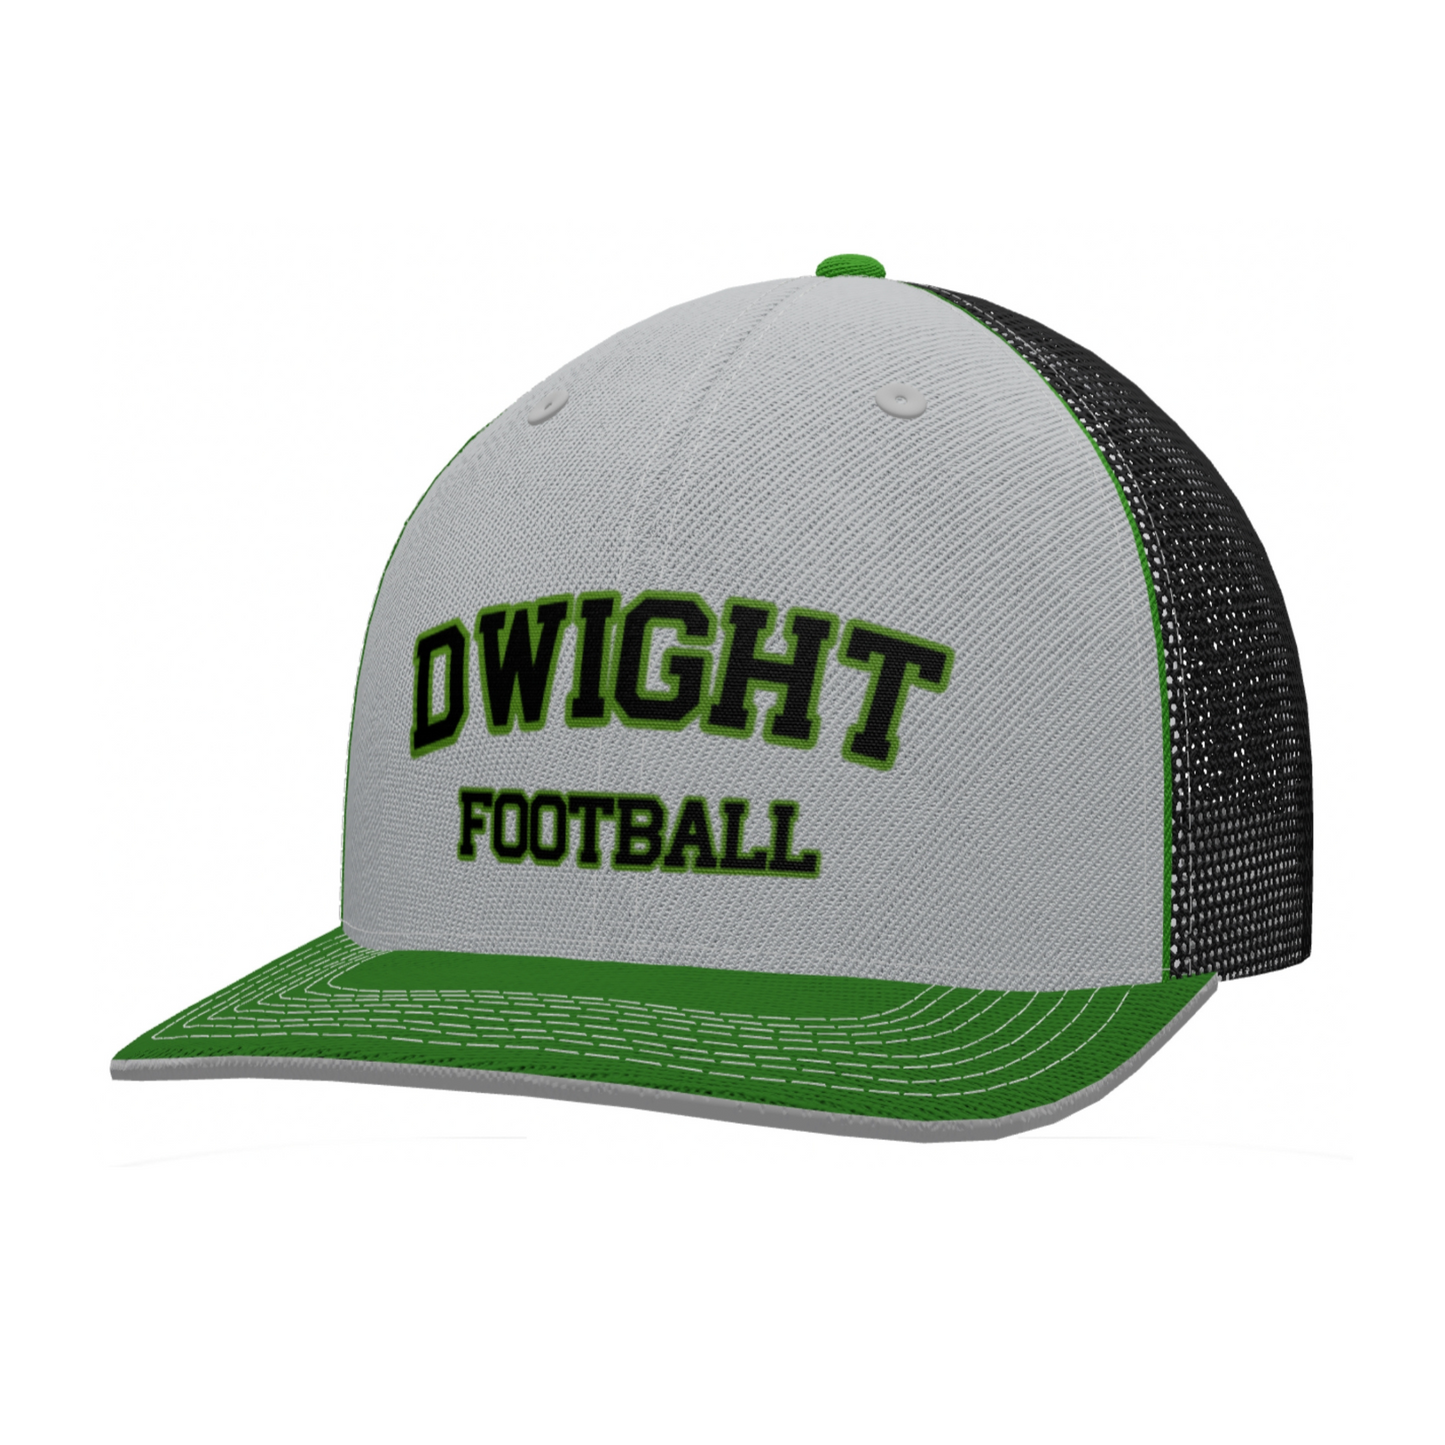 Dwight Football Fitted Mesh Trucker Hat - Green/Grey/Black